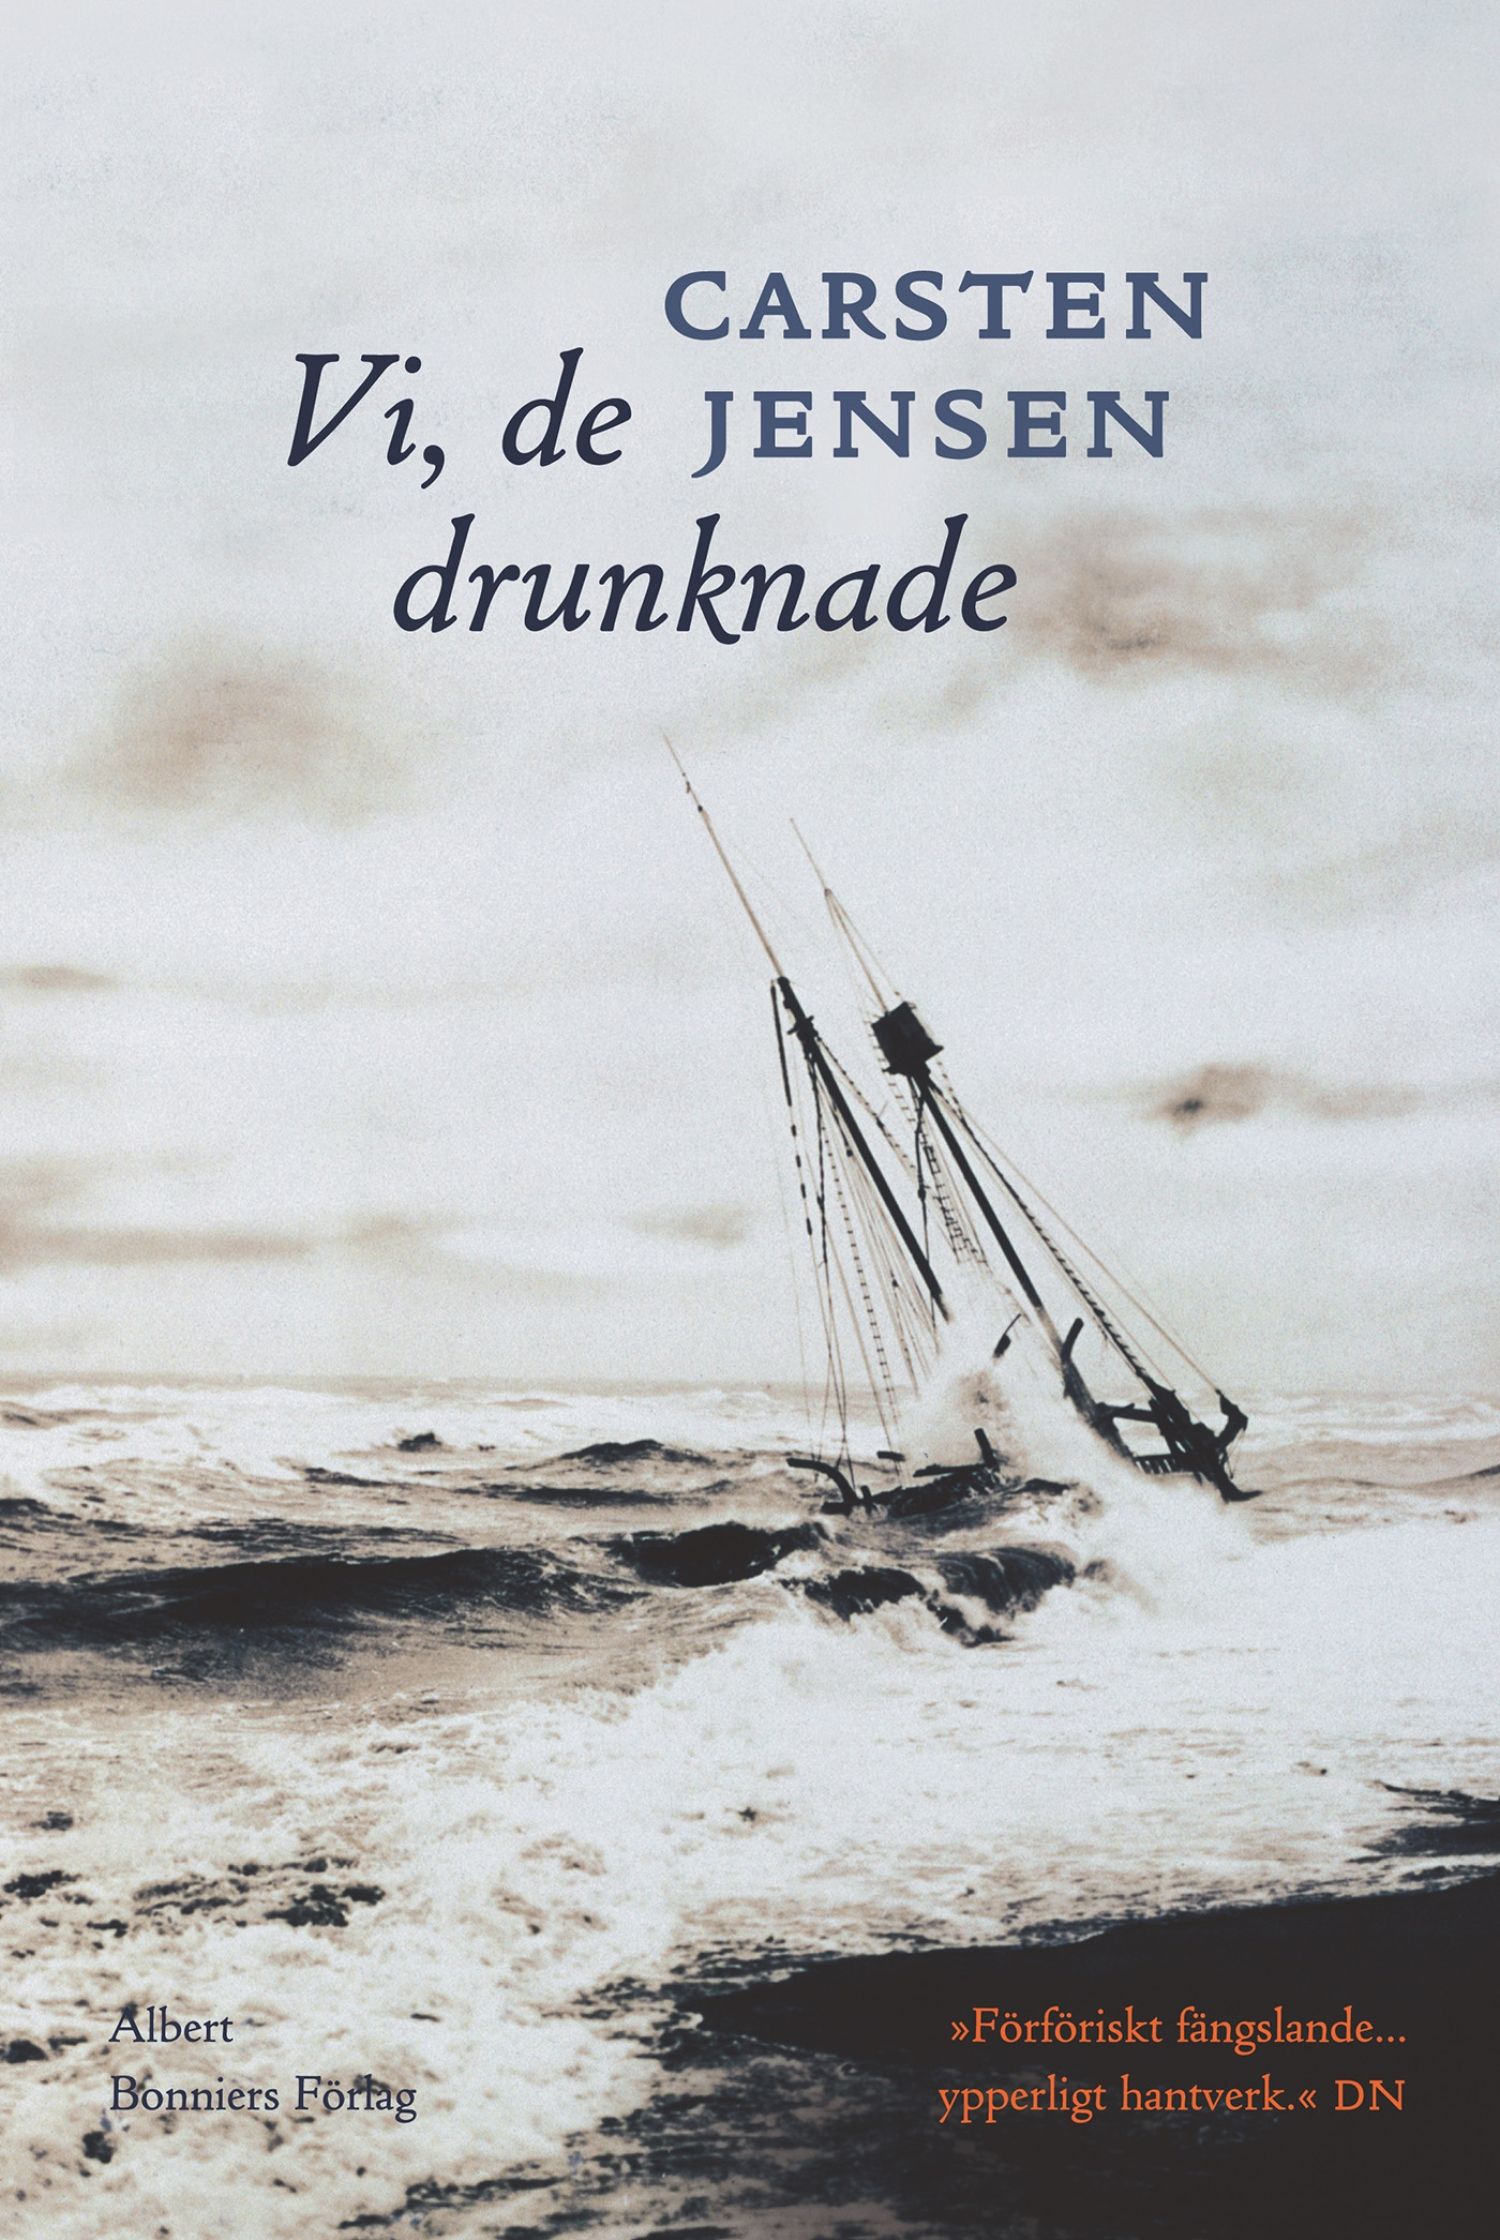 Vi, de drunknade, eBook by Carsten Jensen